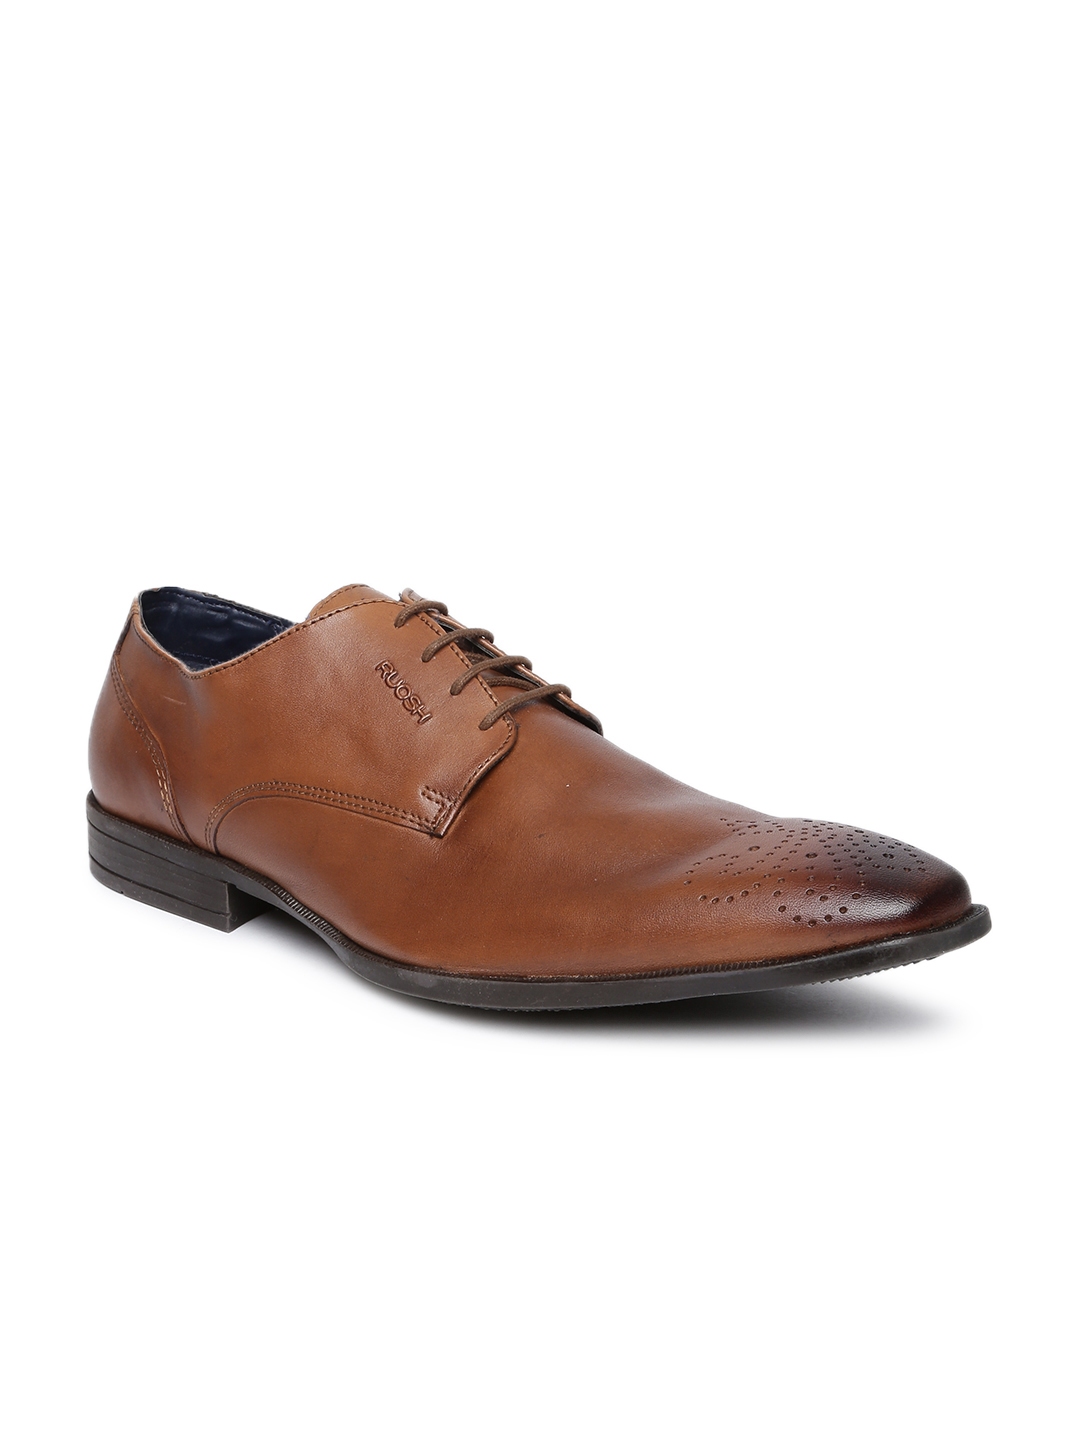 Buy Ruosh Men Tan Brown Leather Formal Derbys - Formal Shoes for Men ...